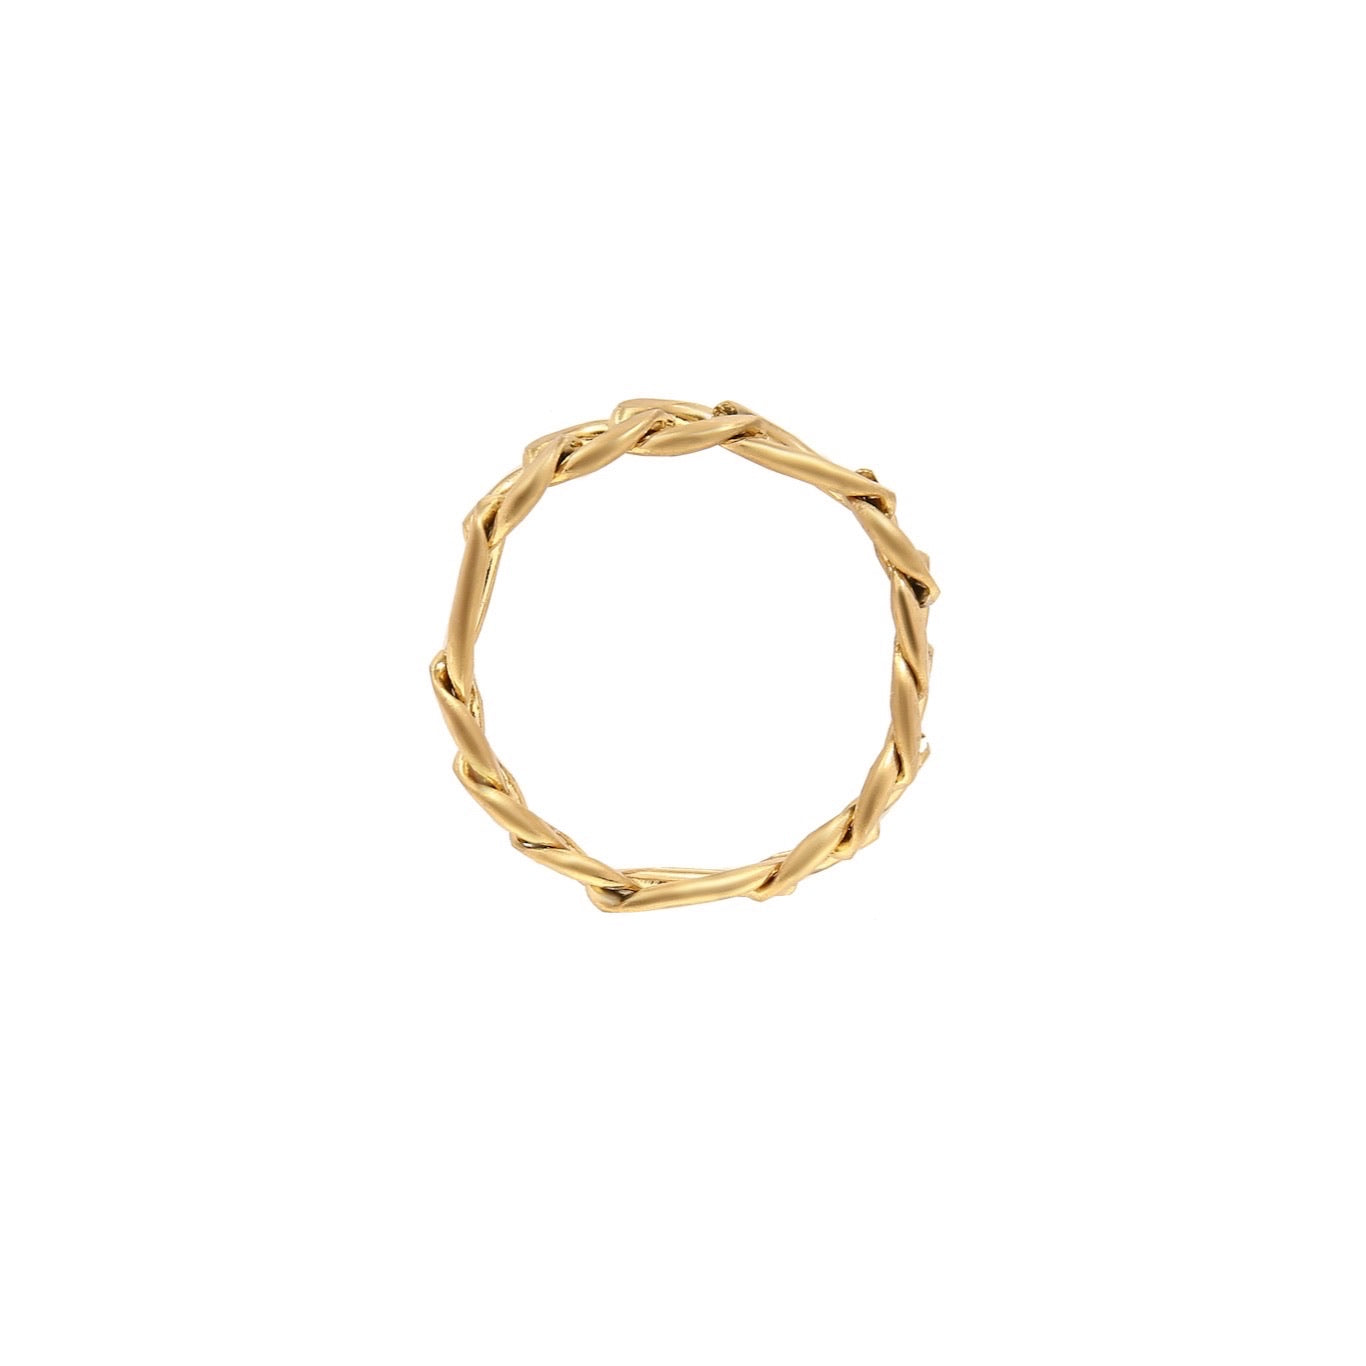 Italian chain ring